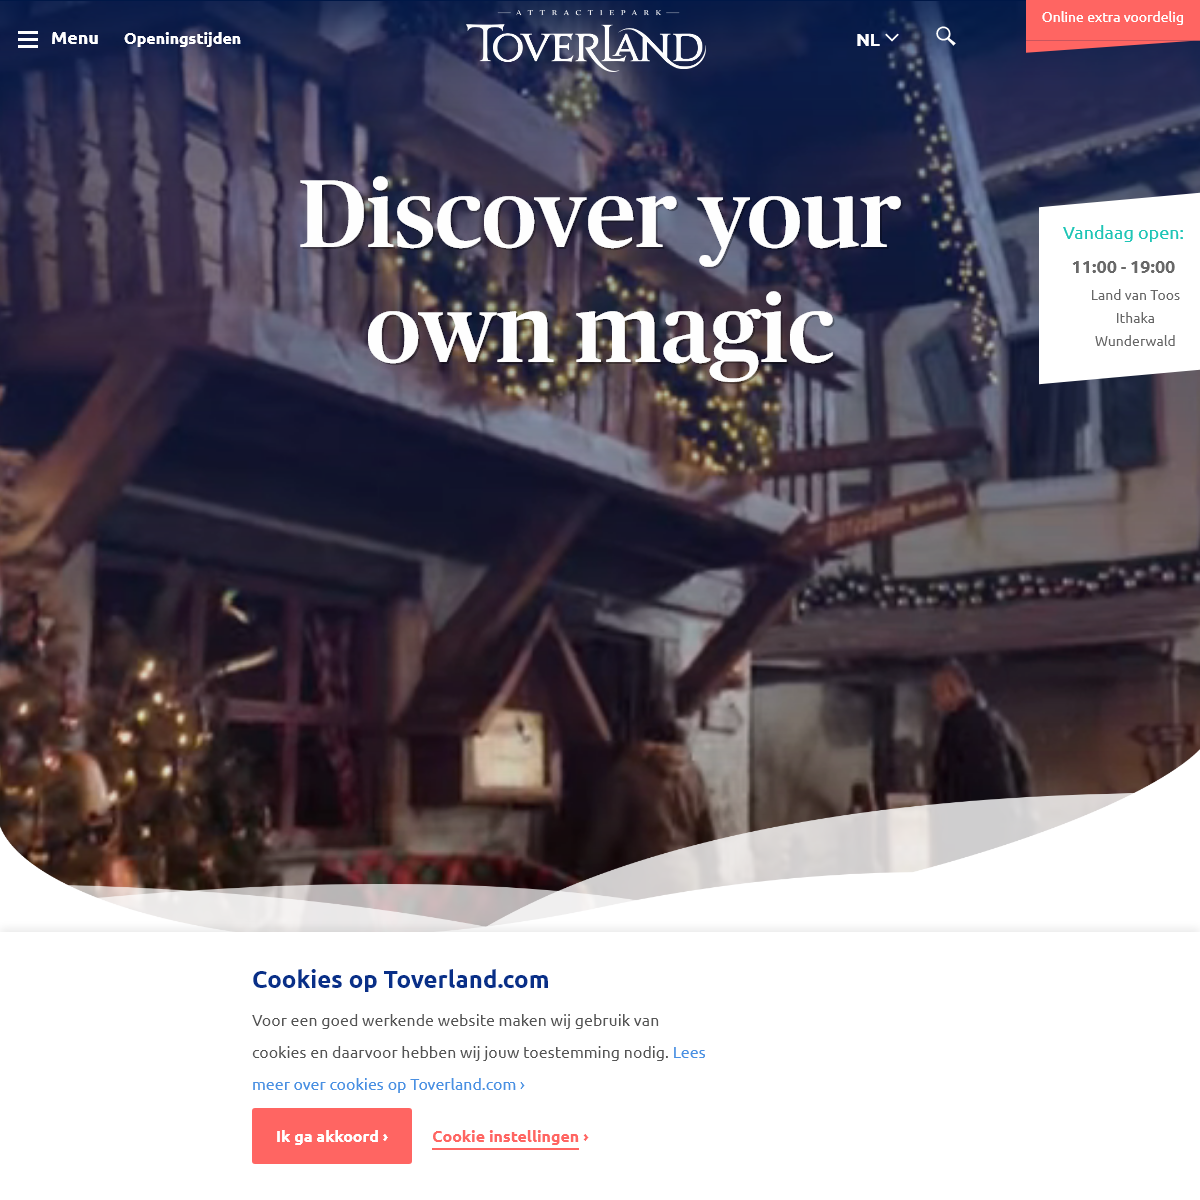 A complete backup of toverland.com